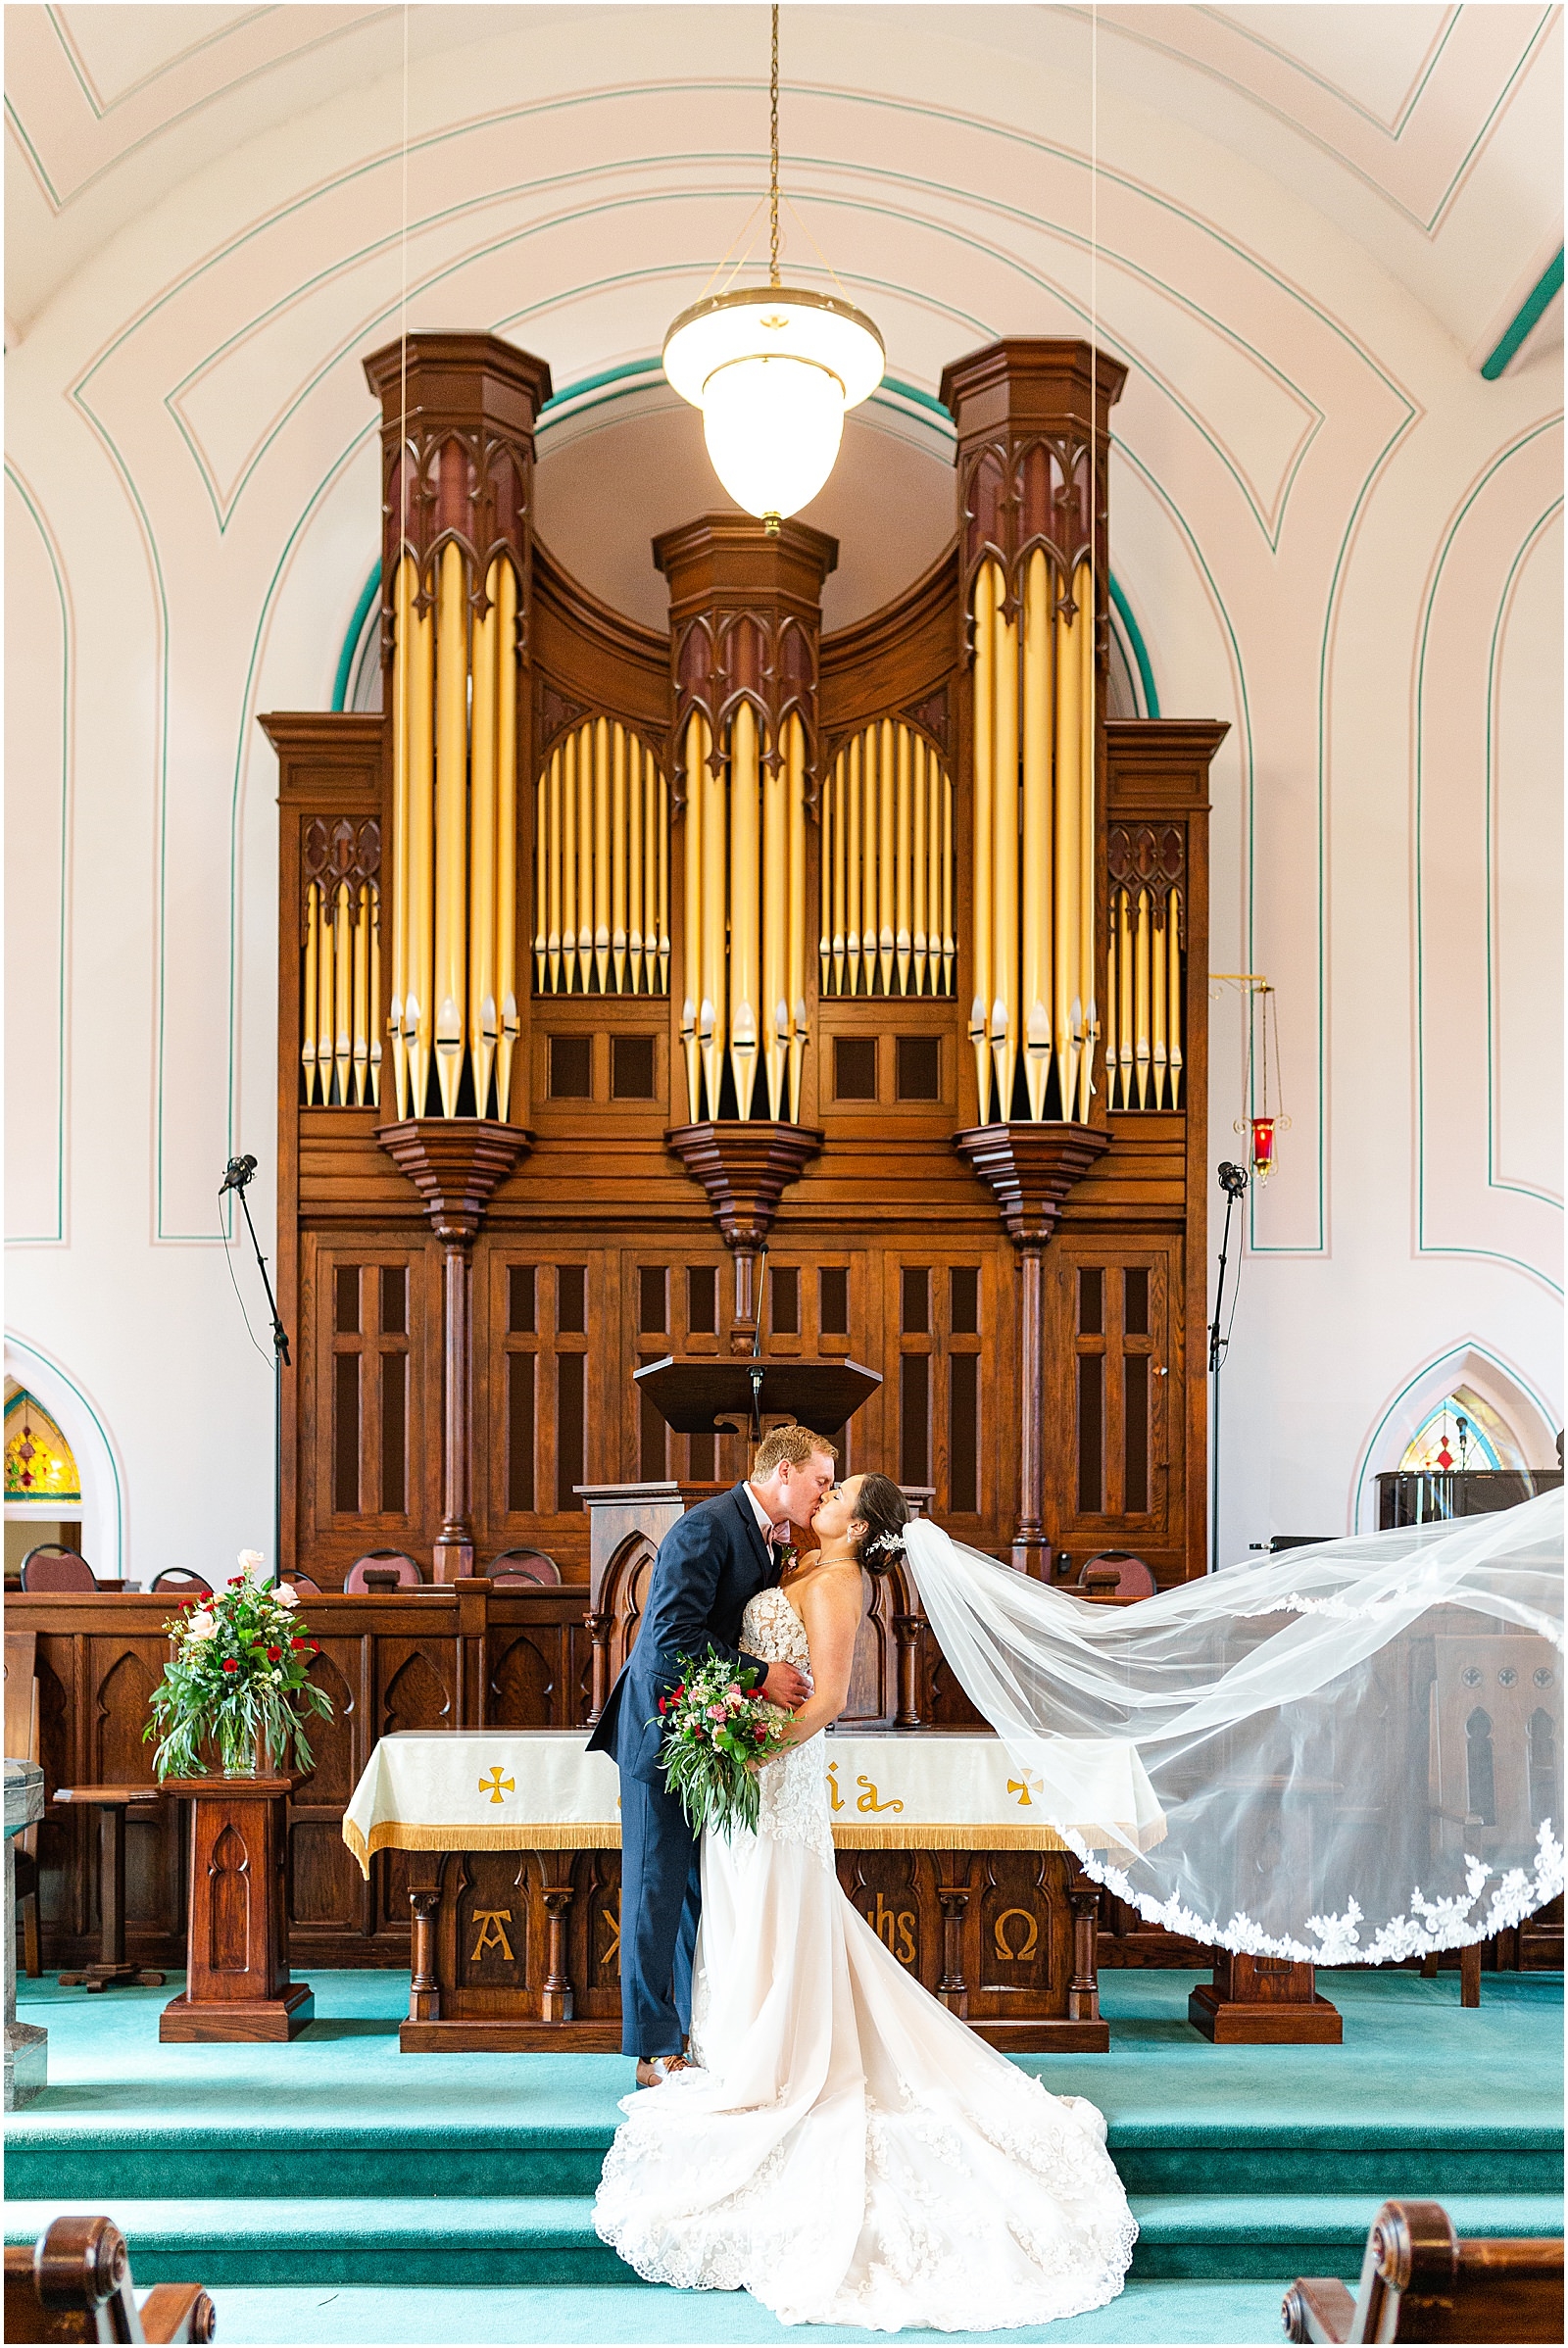 Deidra and Andrew | A Huntingburgh Indiana Wedding Bret and Brandie | Evansville Photographers | @bretandbrandie-0120.jpg